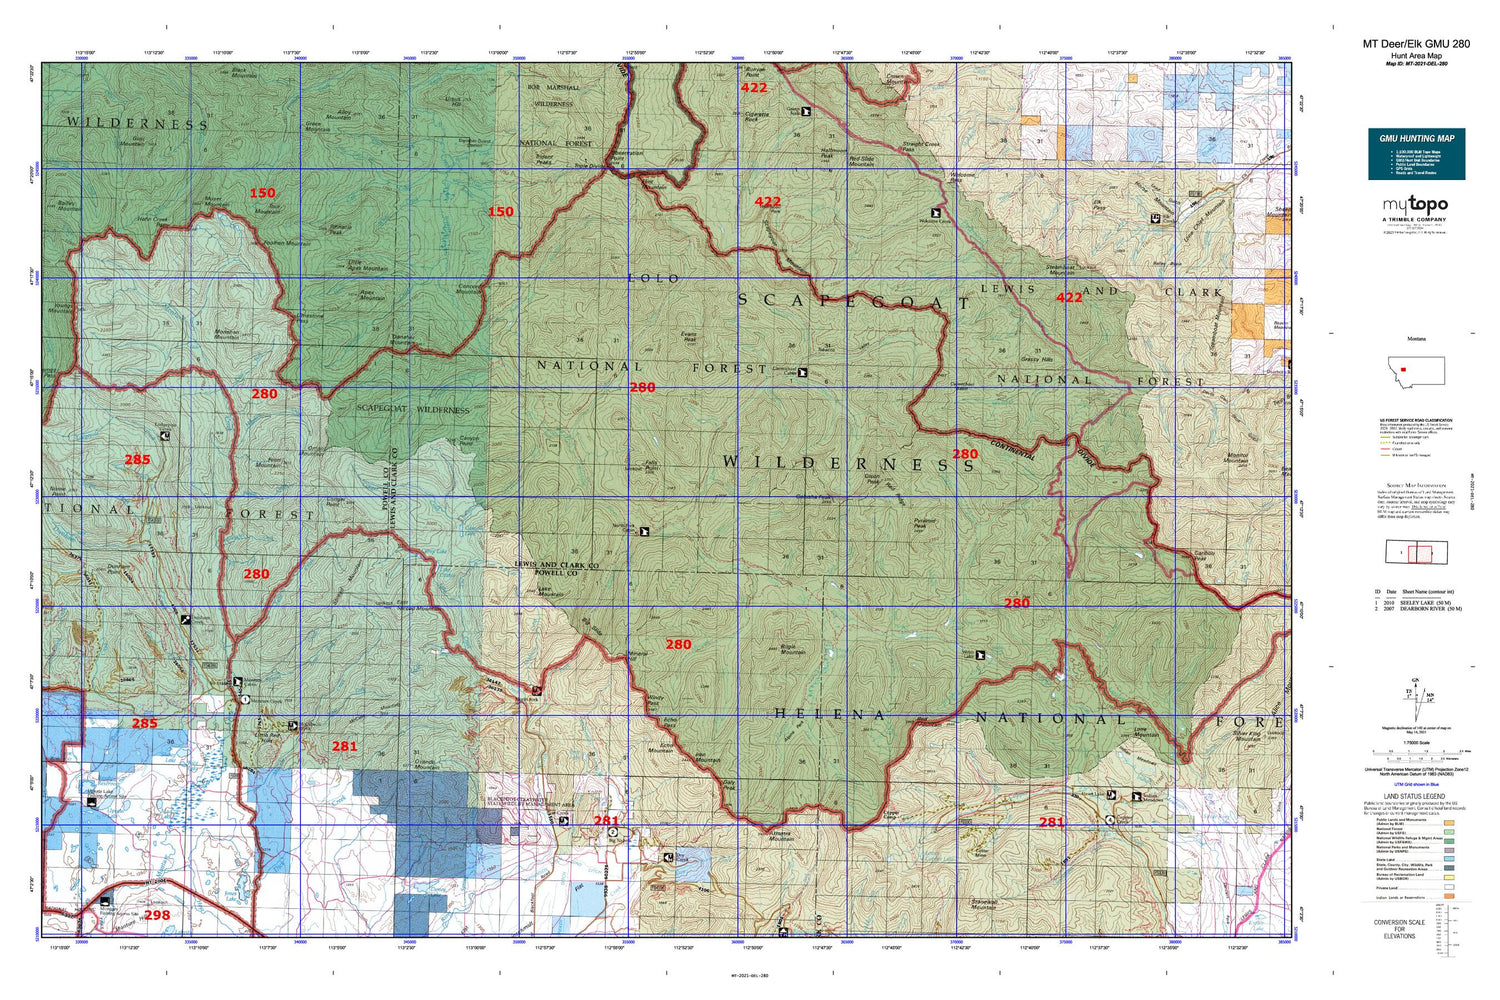 Montana Deer/Elk GMU 280 Map Image